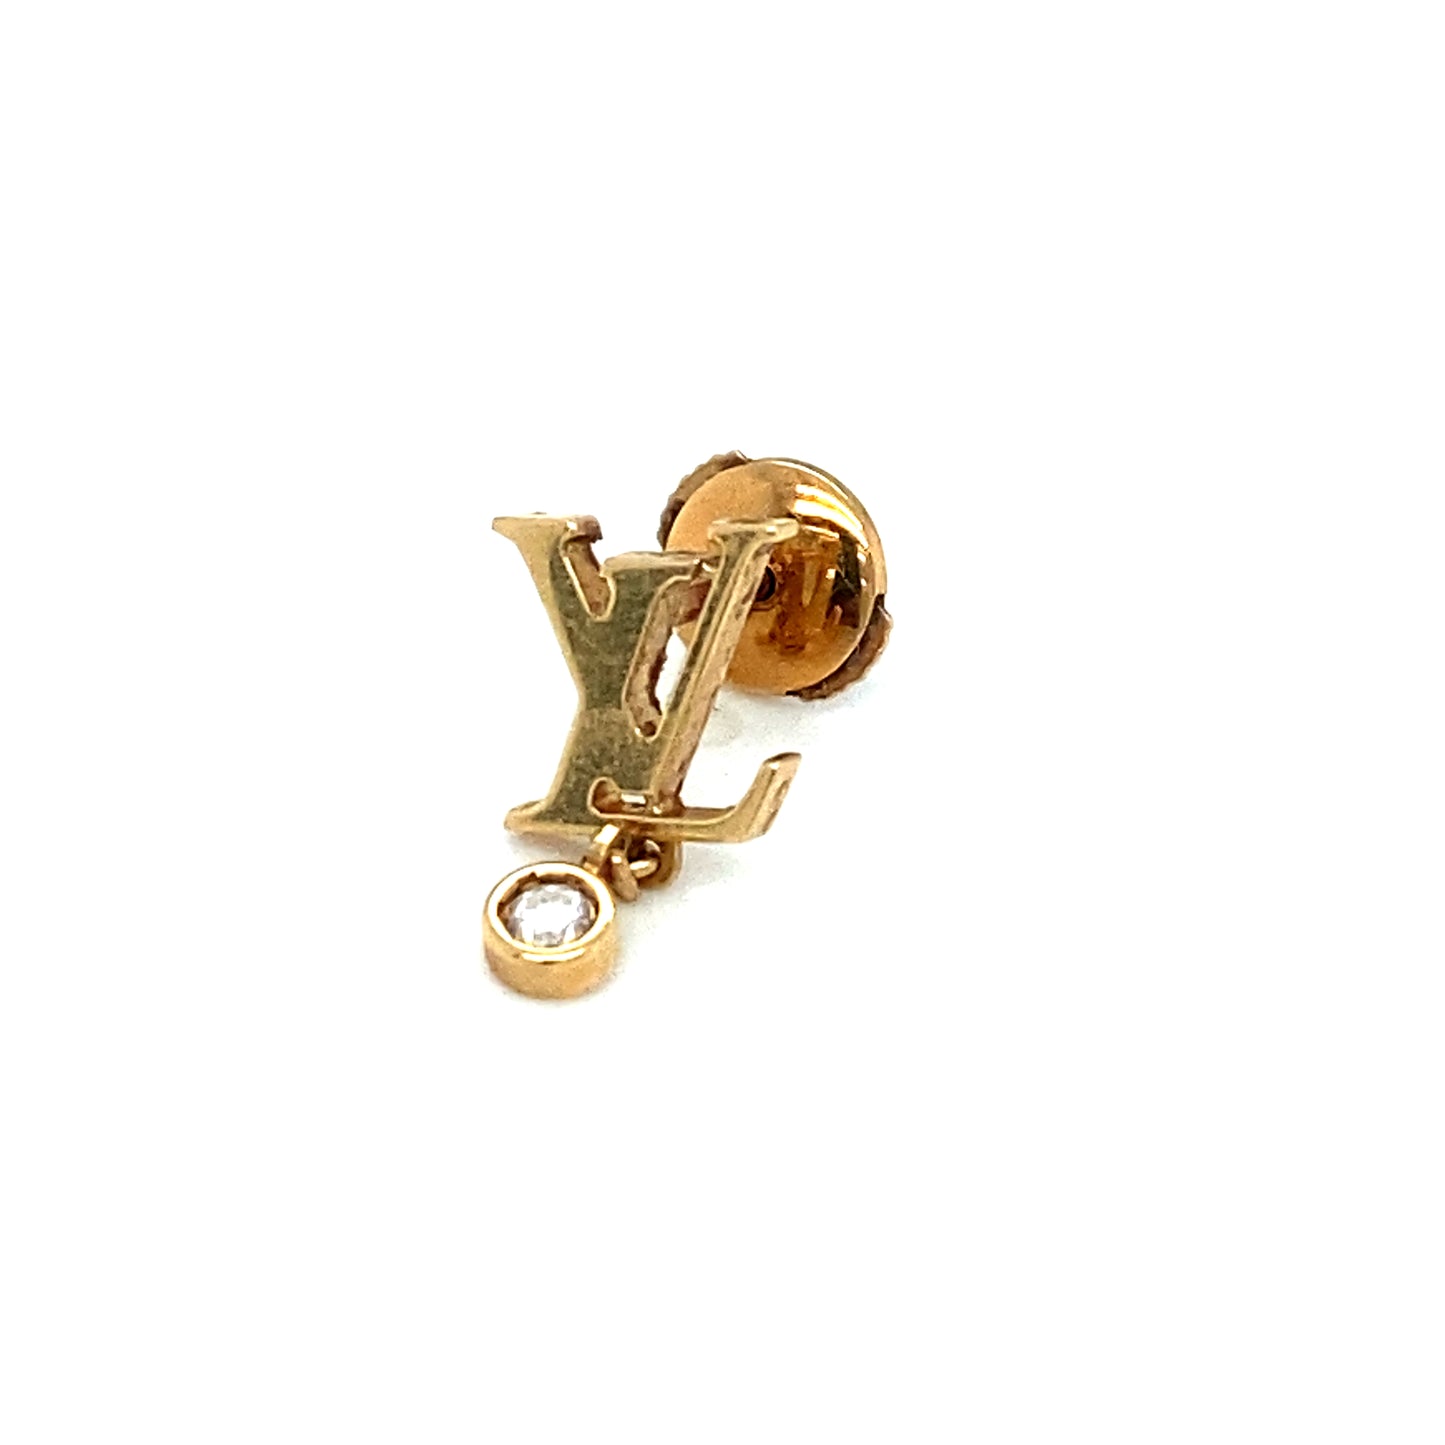 Circa 2000s LOUIS VUITTON Monogram Single Earring Stud with Diamond in 18k Gold